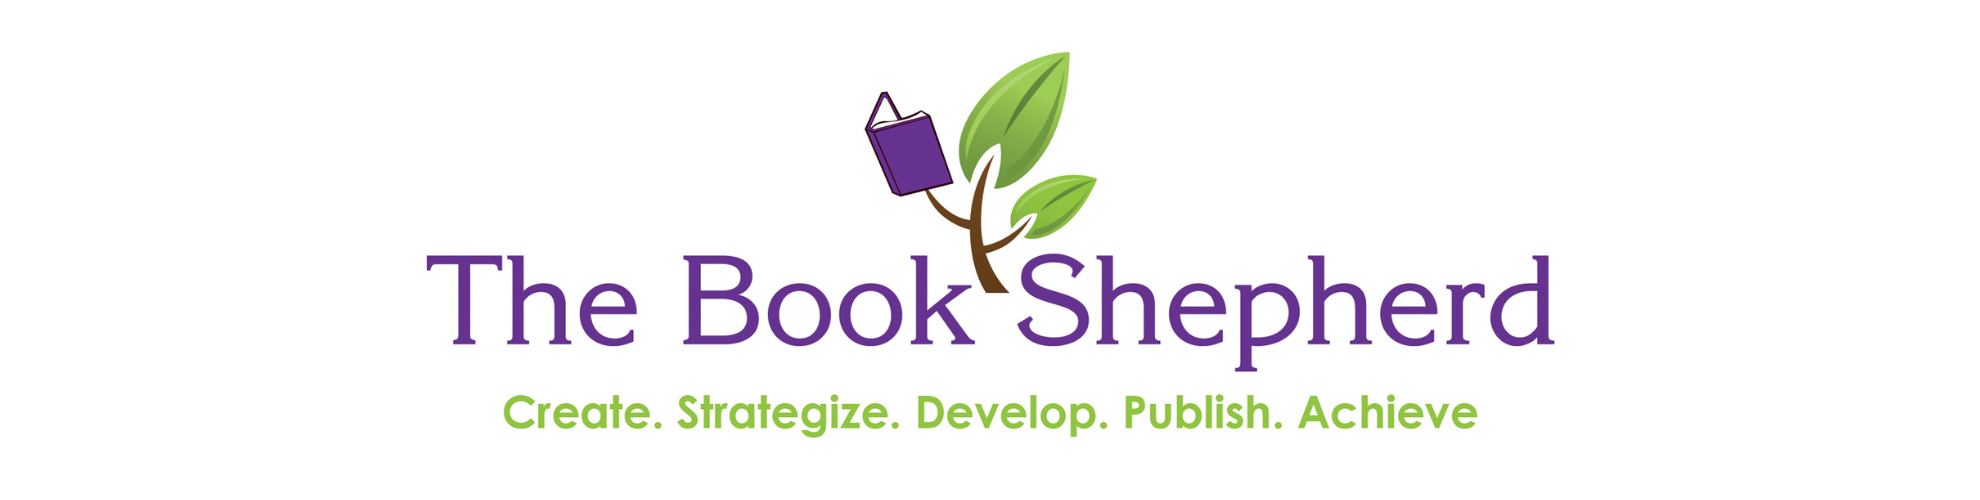 The Book Shepherd Service